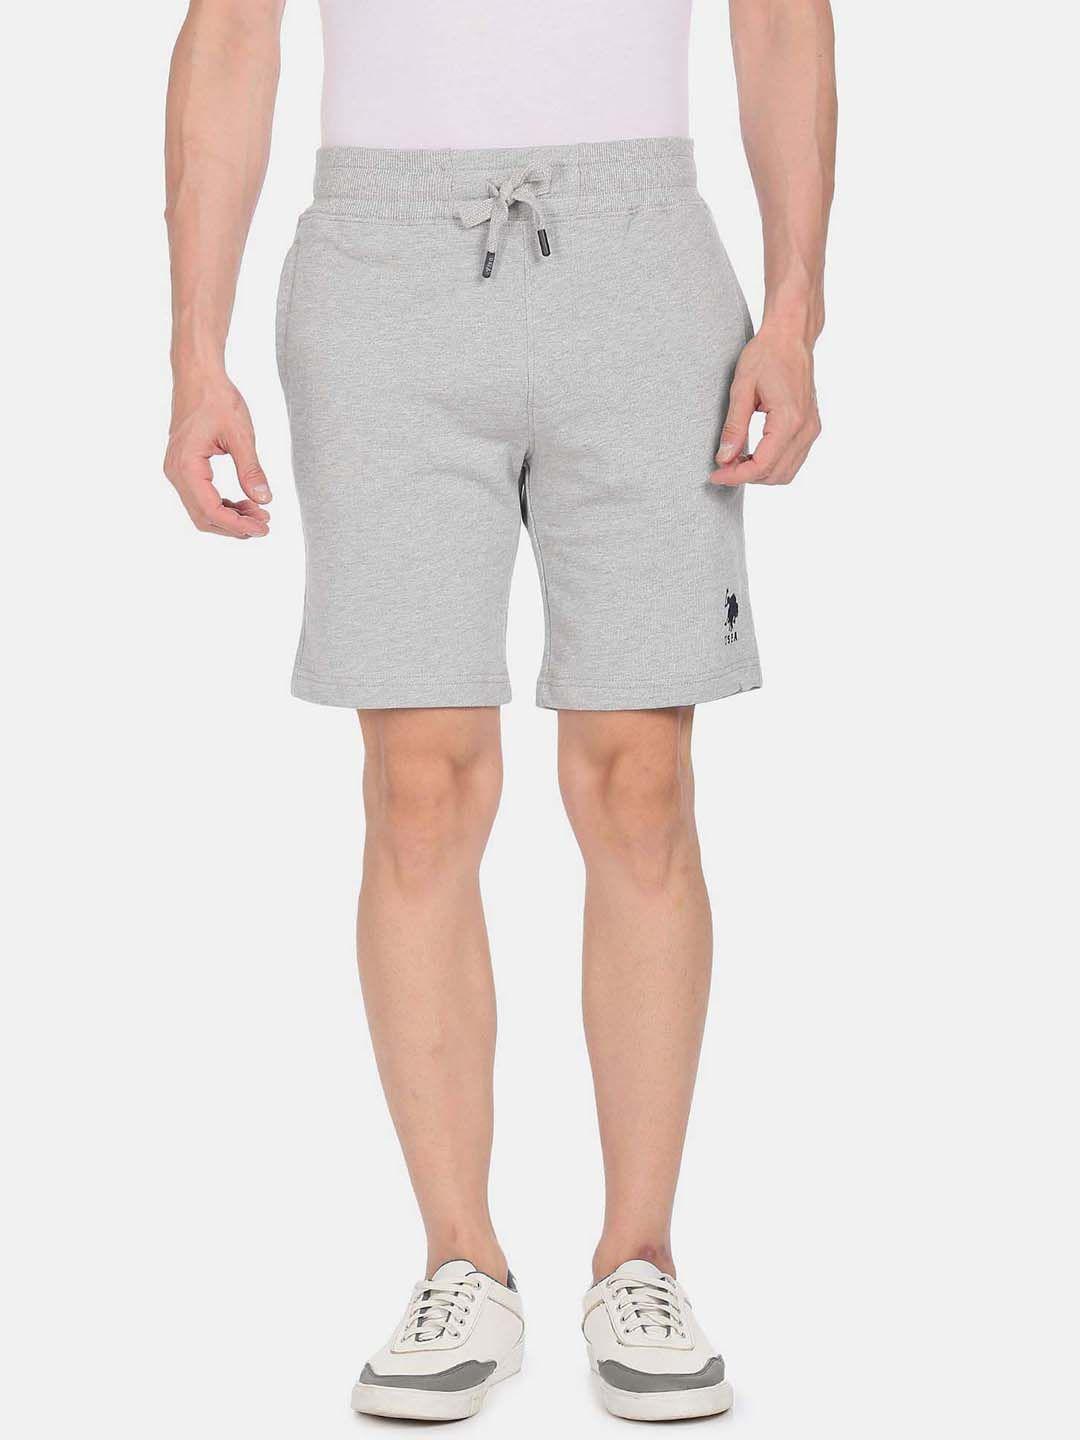 u-s-polo-assn-men-grey-regular-shorts